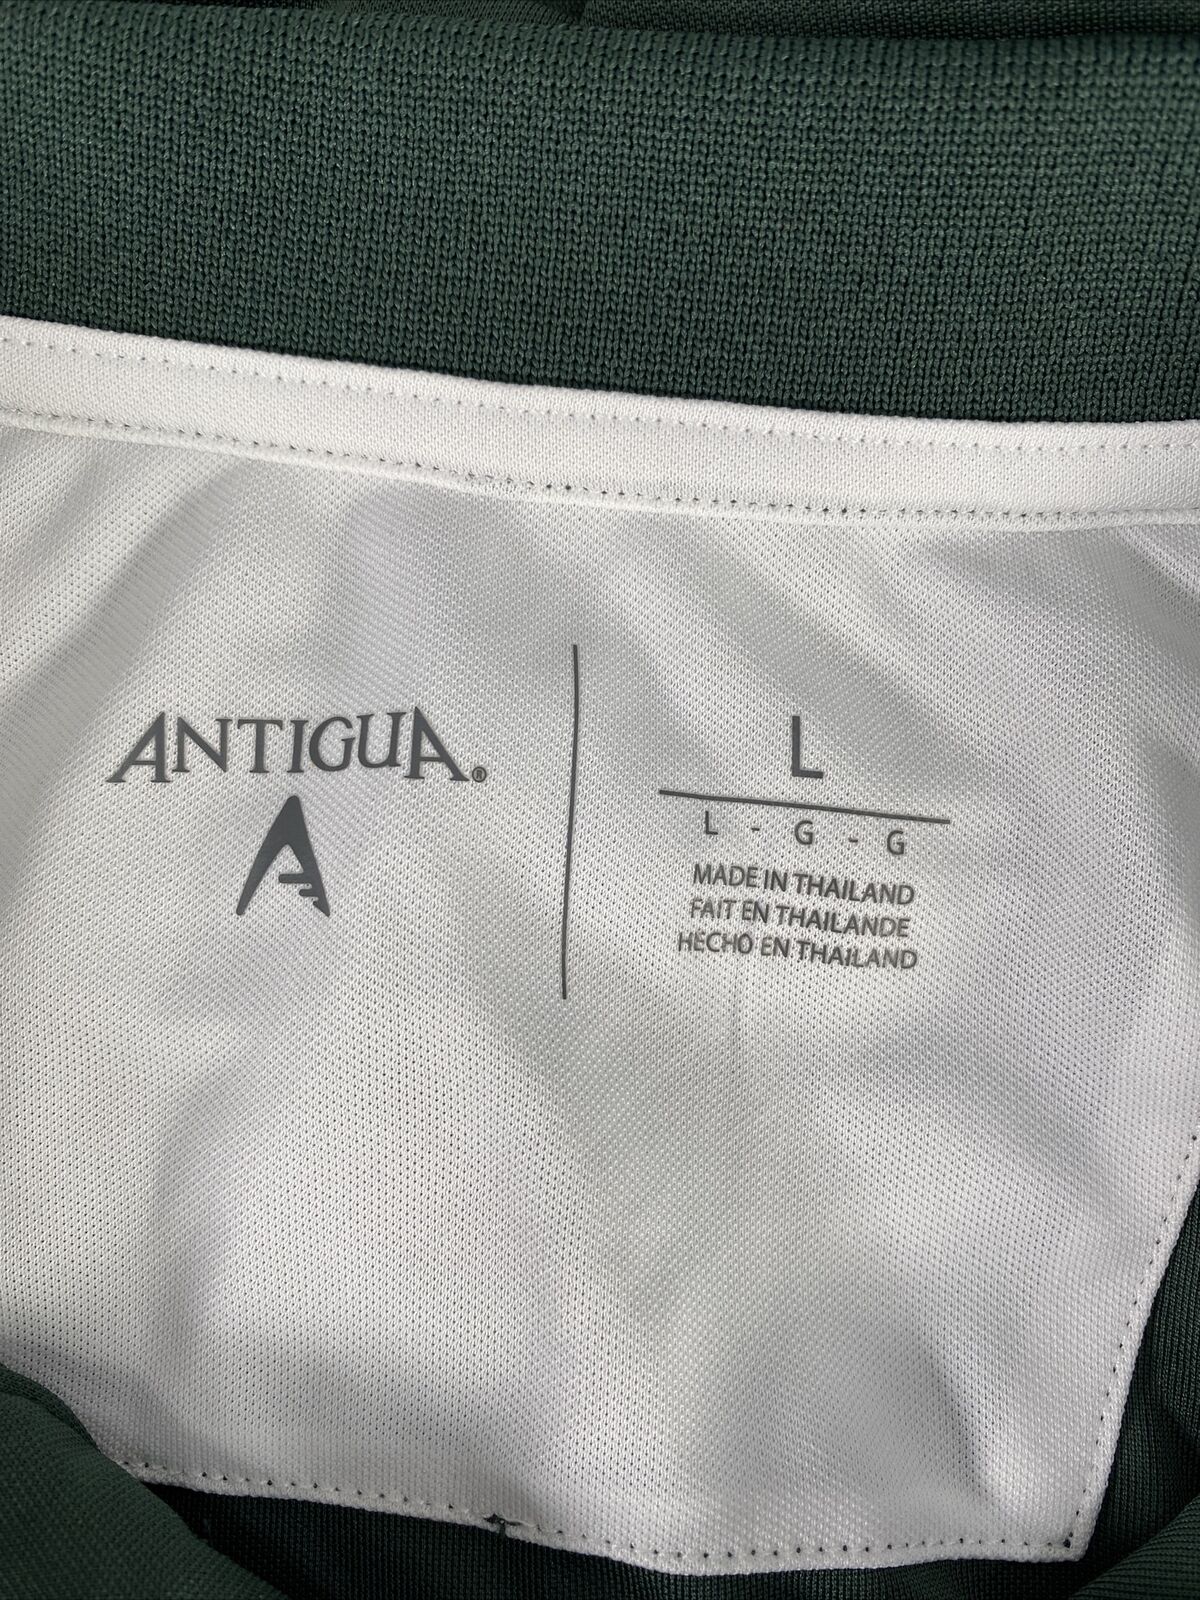 NEW Antigua Men's Green/White Short Sleeve Athletic Polo - L